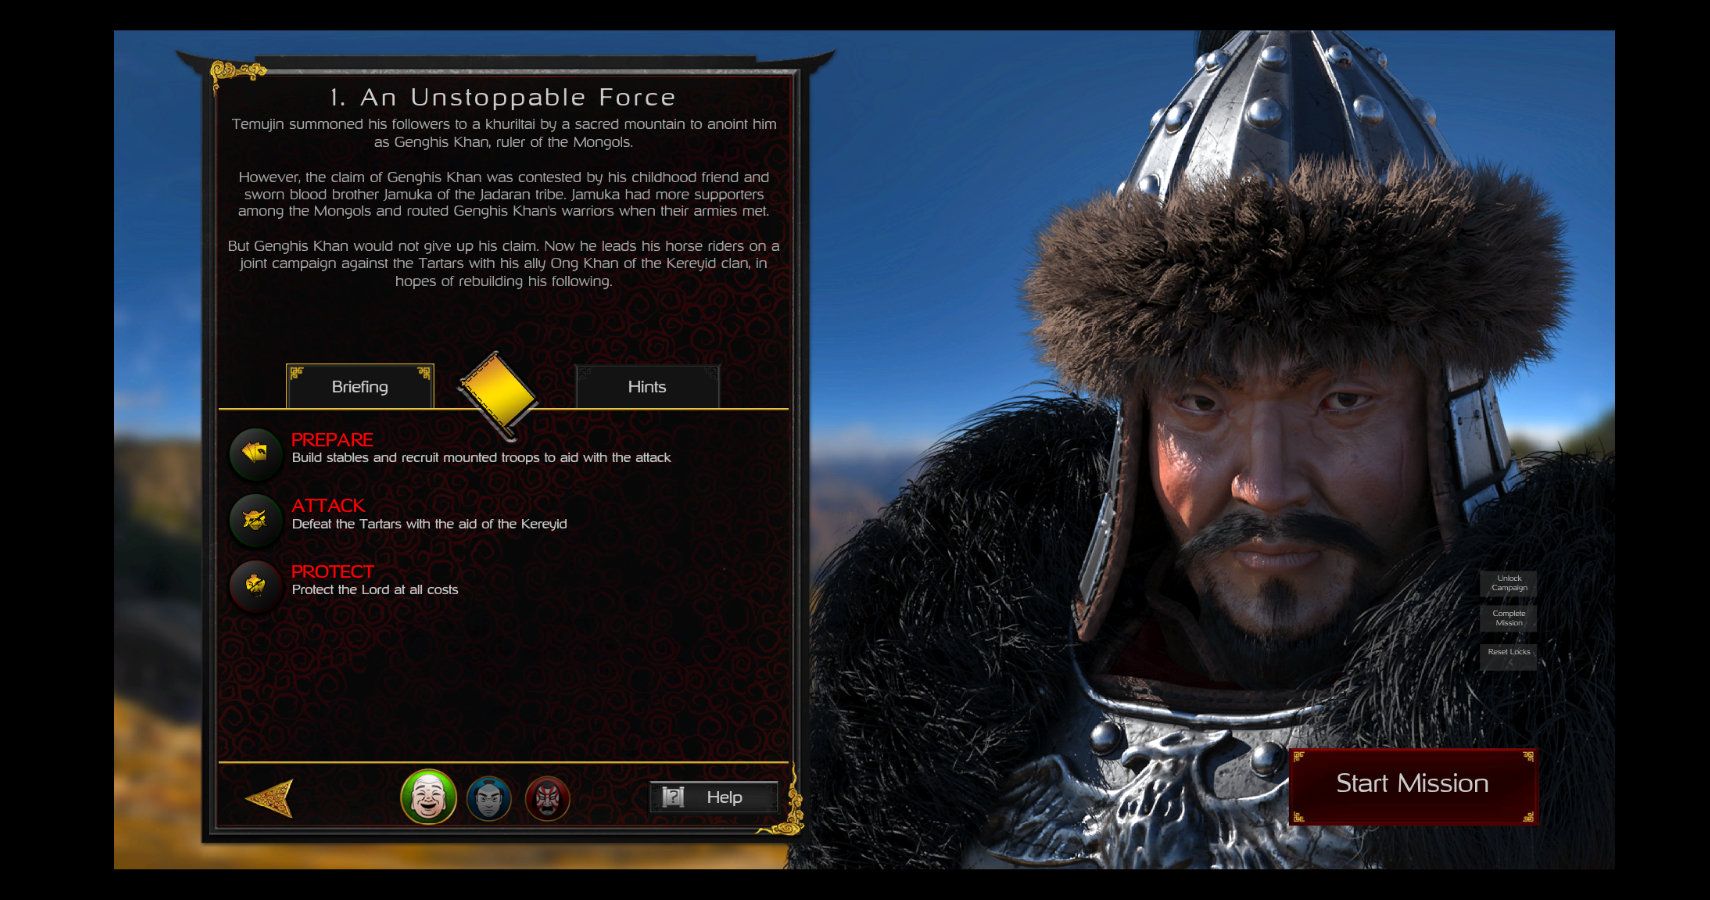 Genghis Khan campaign scenario one briefing screen.